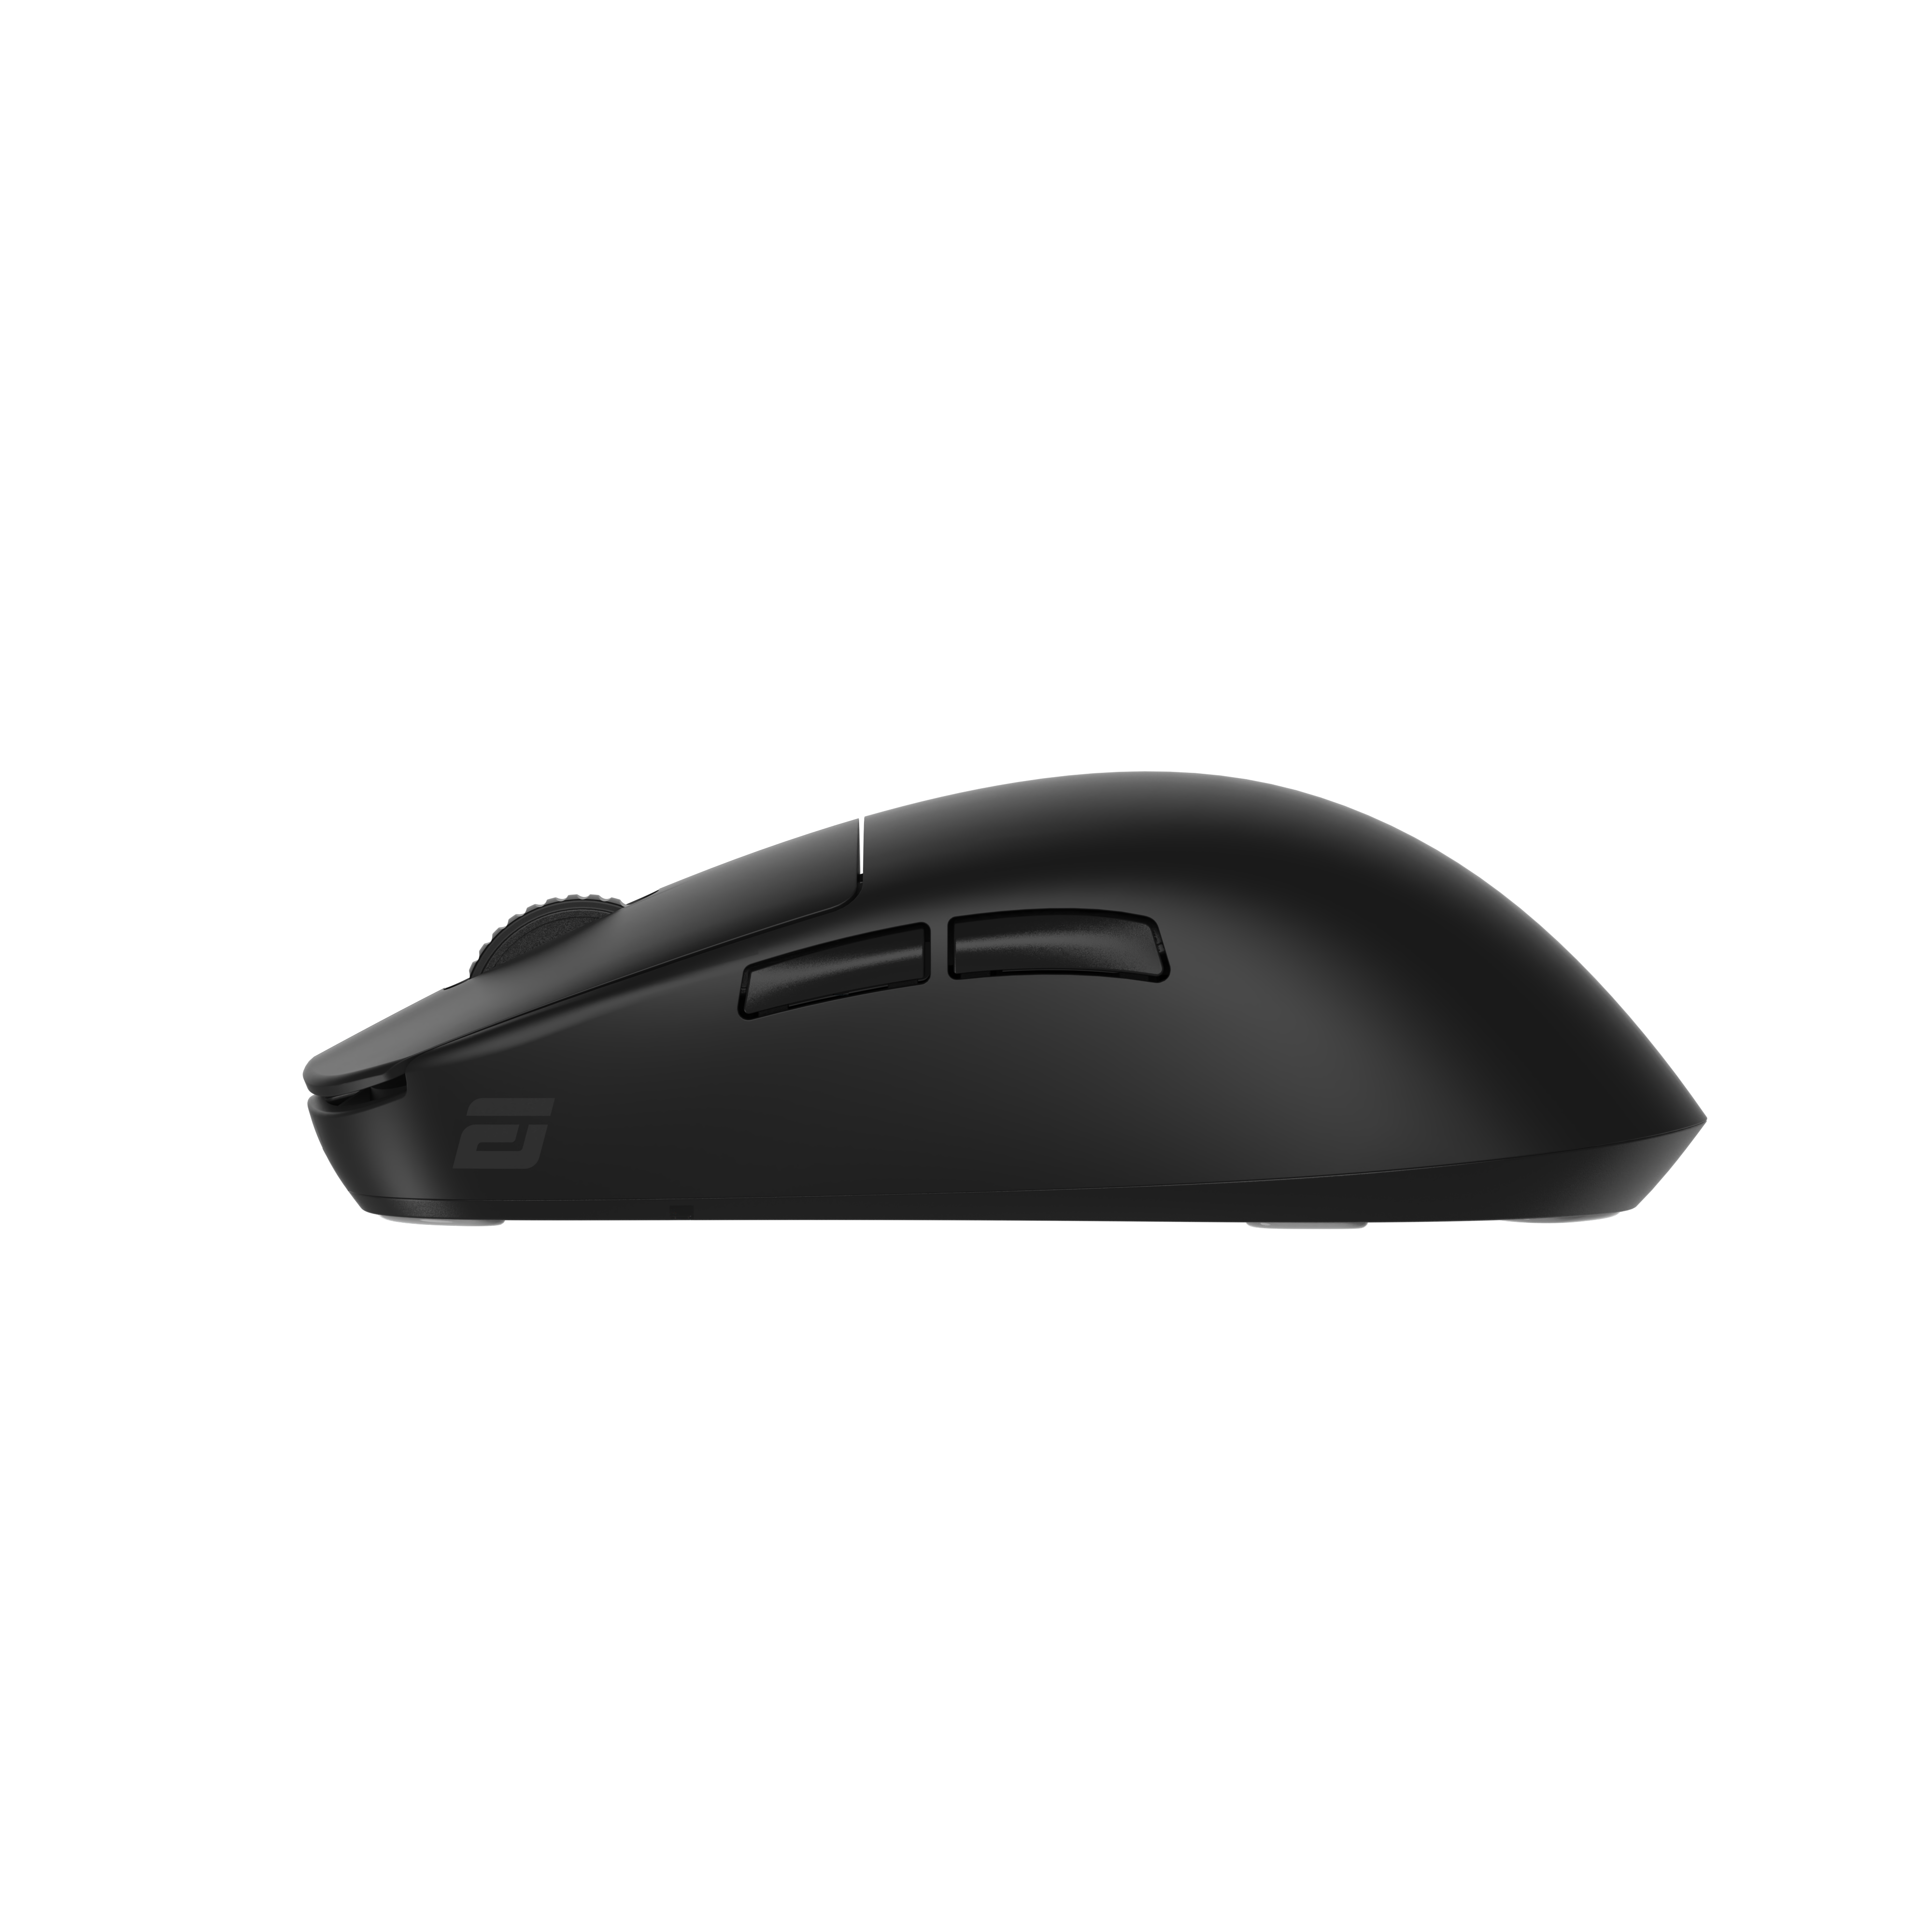 Endgame Gear - Endgame Gear OP1we Wireless Gaming Mouse - Black